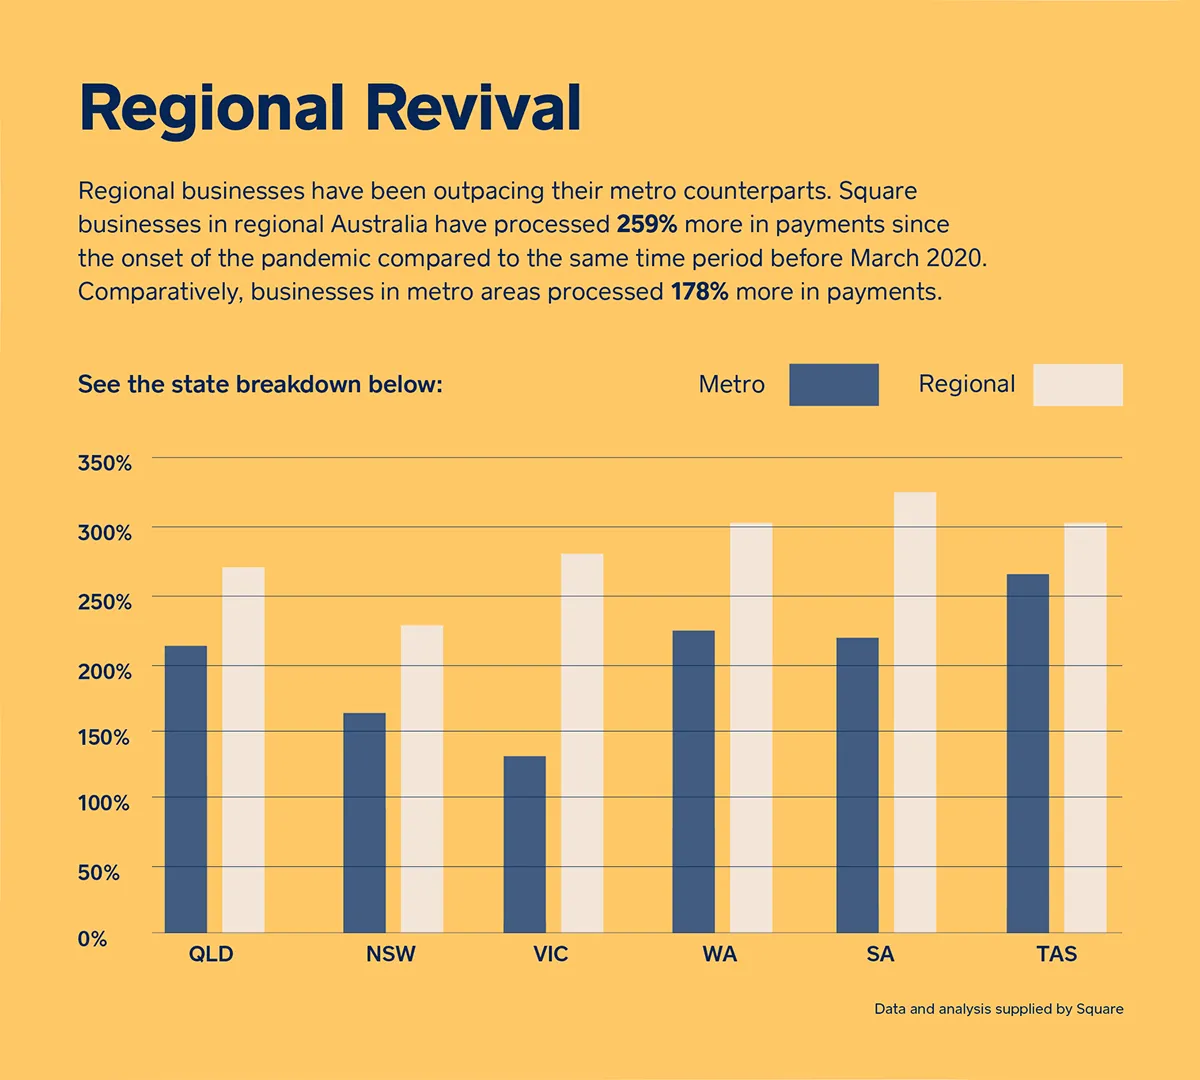 Regional Revival